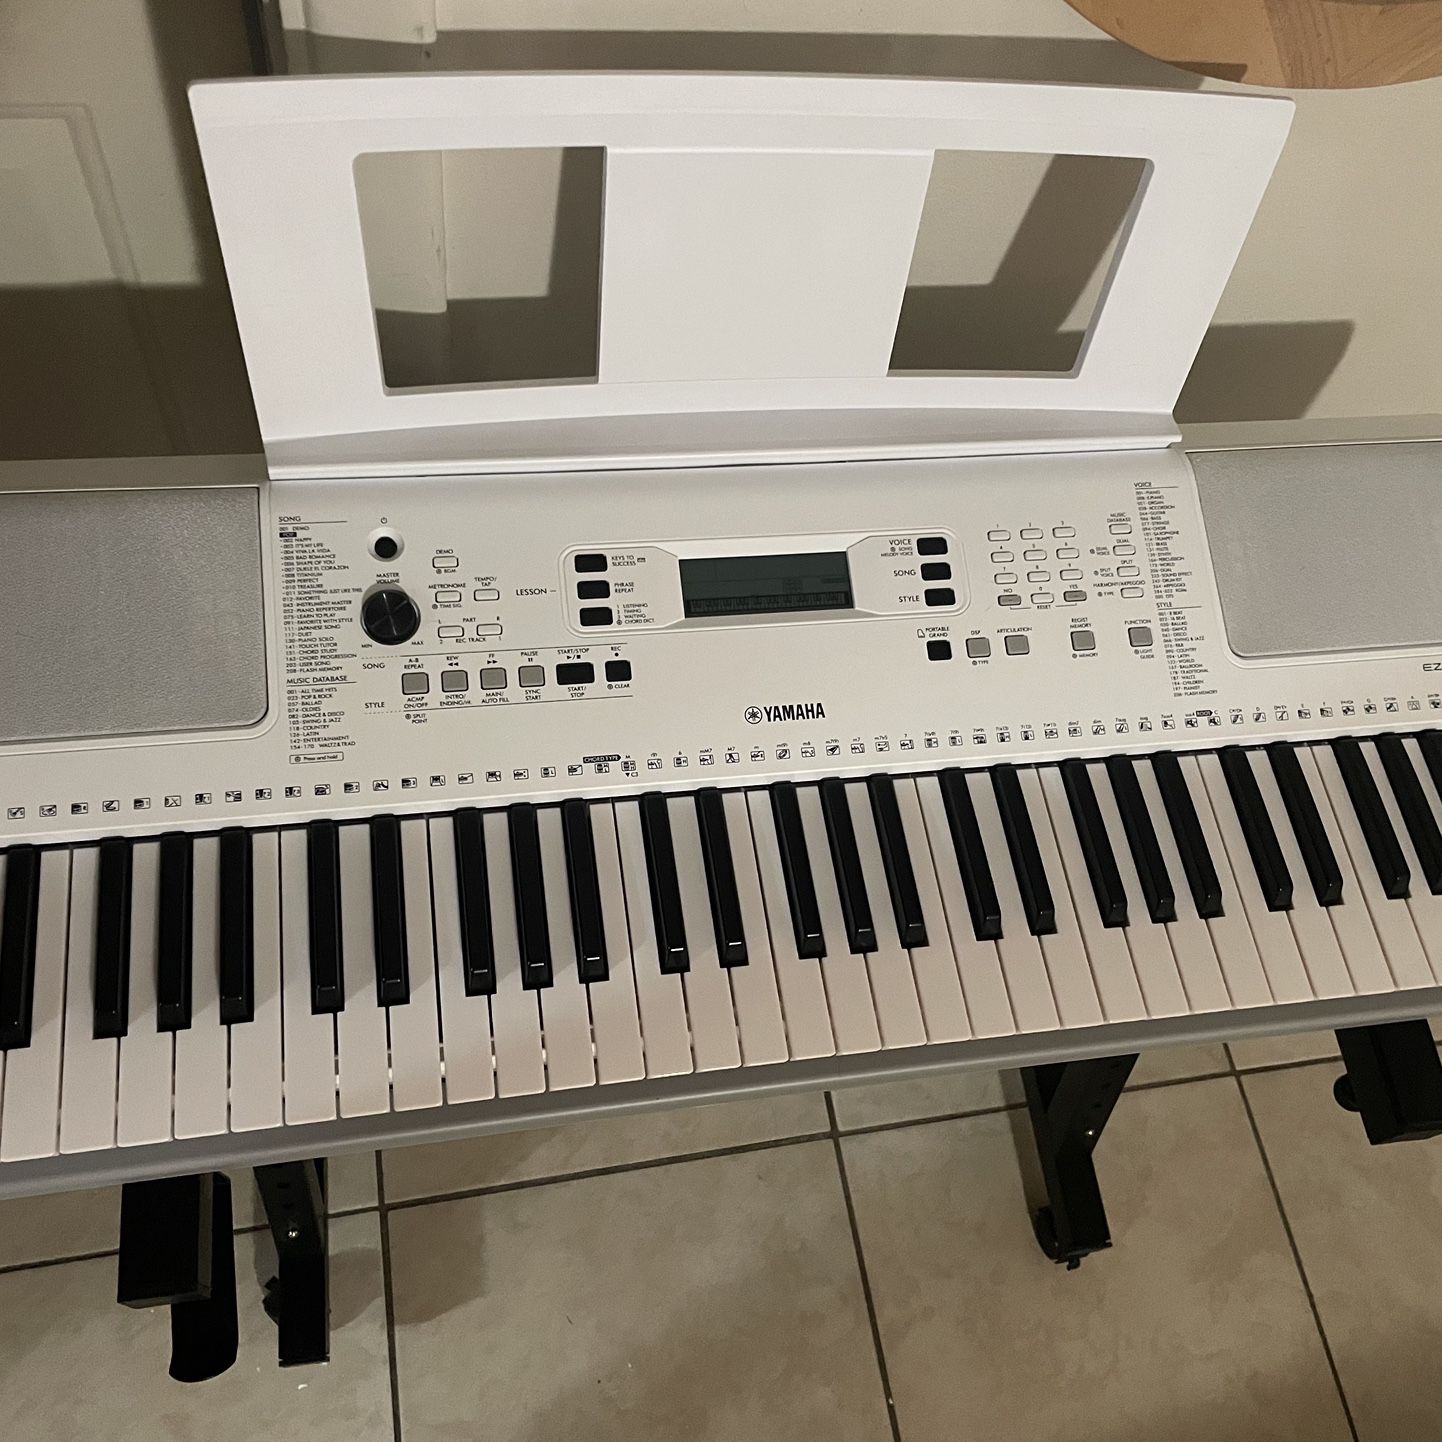 Yamaha EZ-300AD keyboard with lighted keys, plus adjustable keyboard stand with wheels: